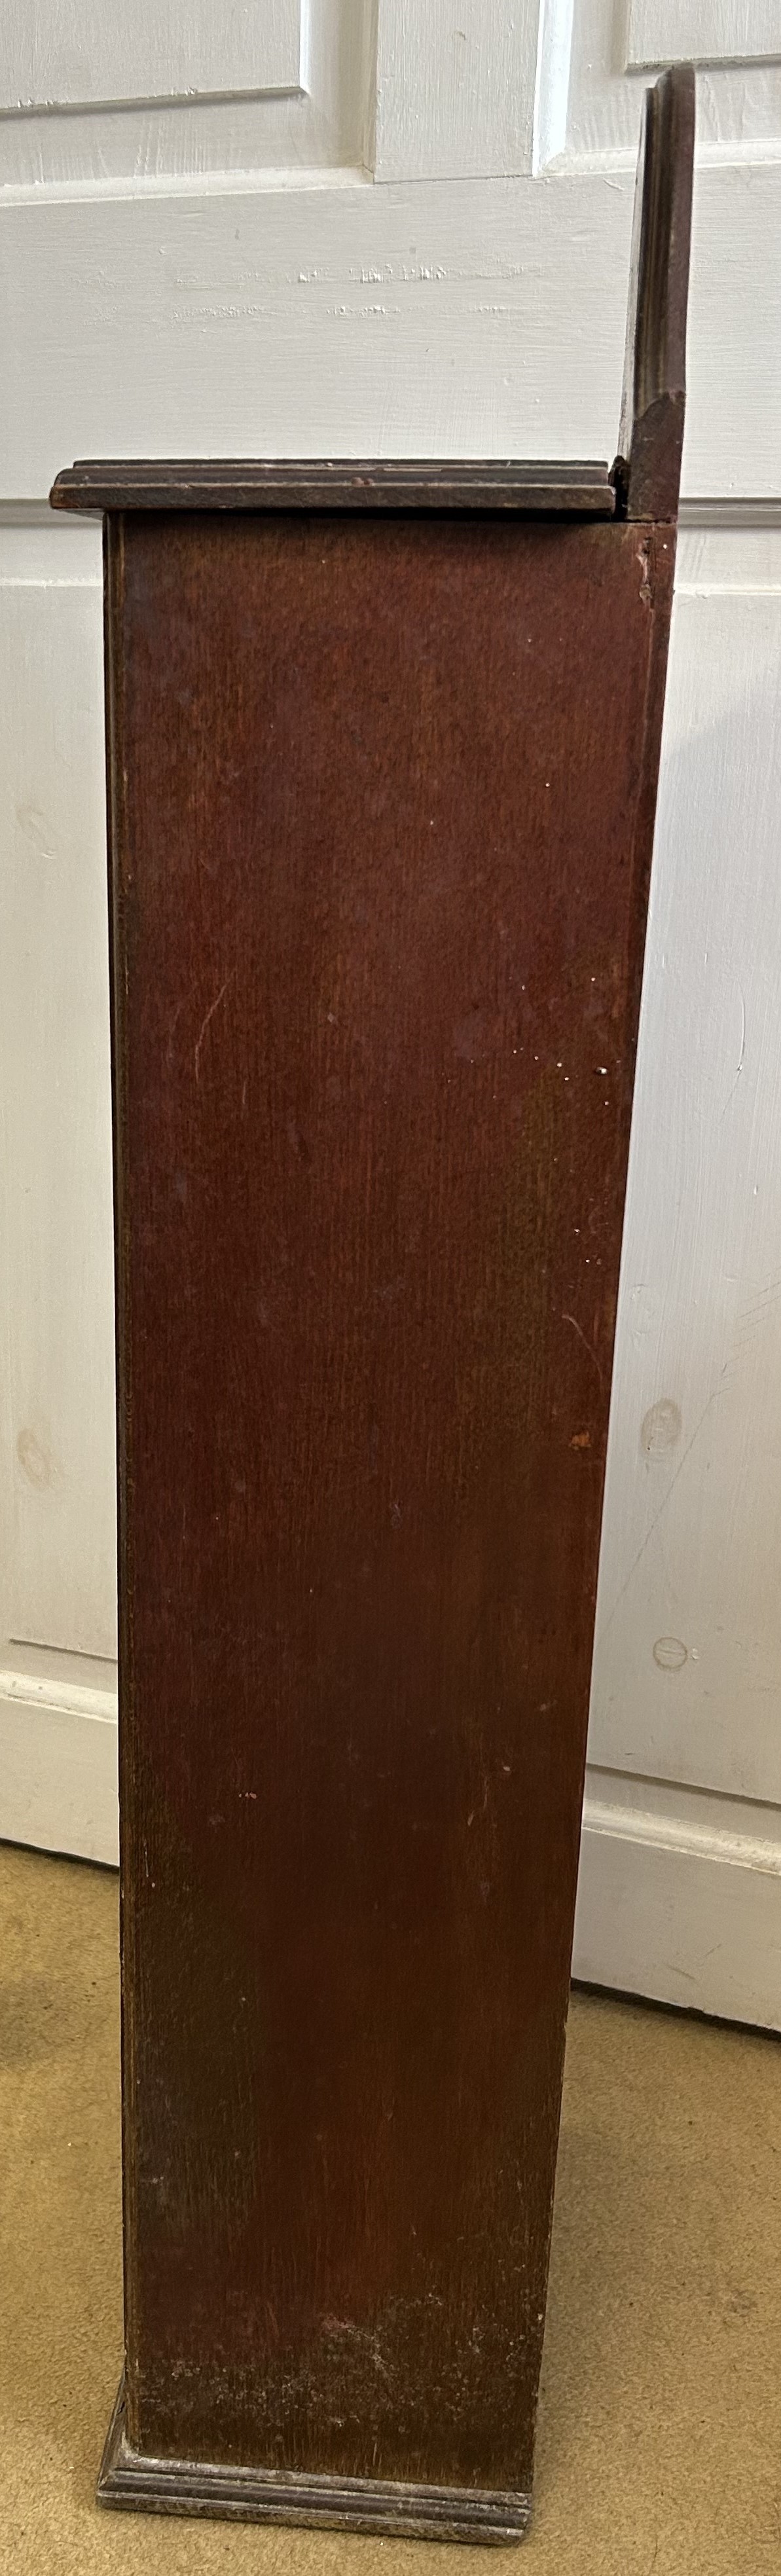 A vintage wood baguette holder with copper design panels to the front. 91.5cm h x 26cm w x 17cm d. - Image 2 of 4